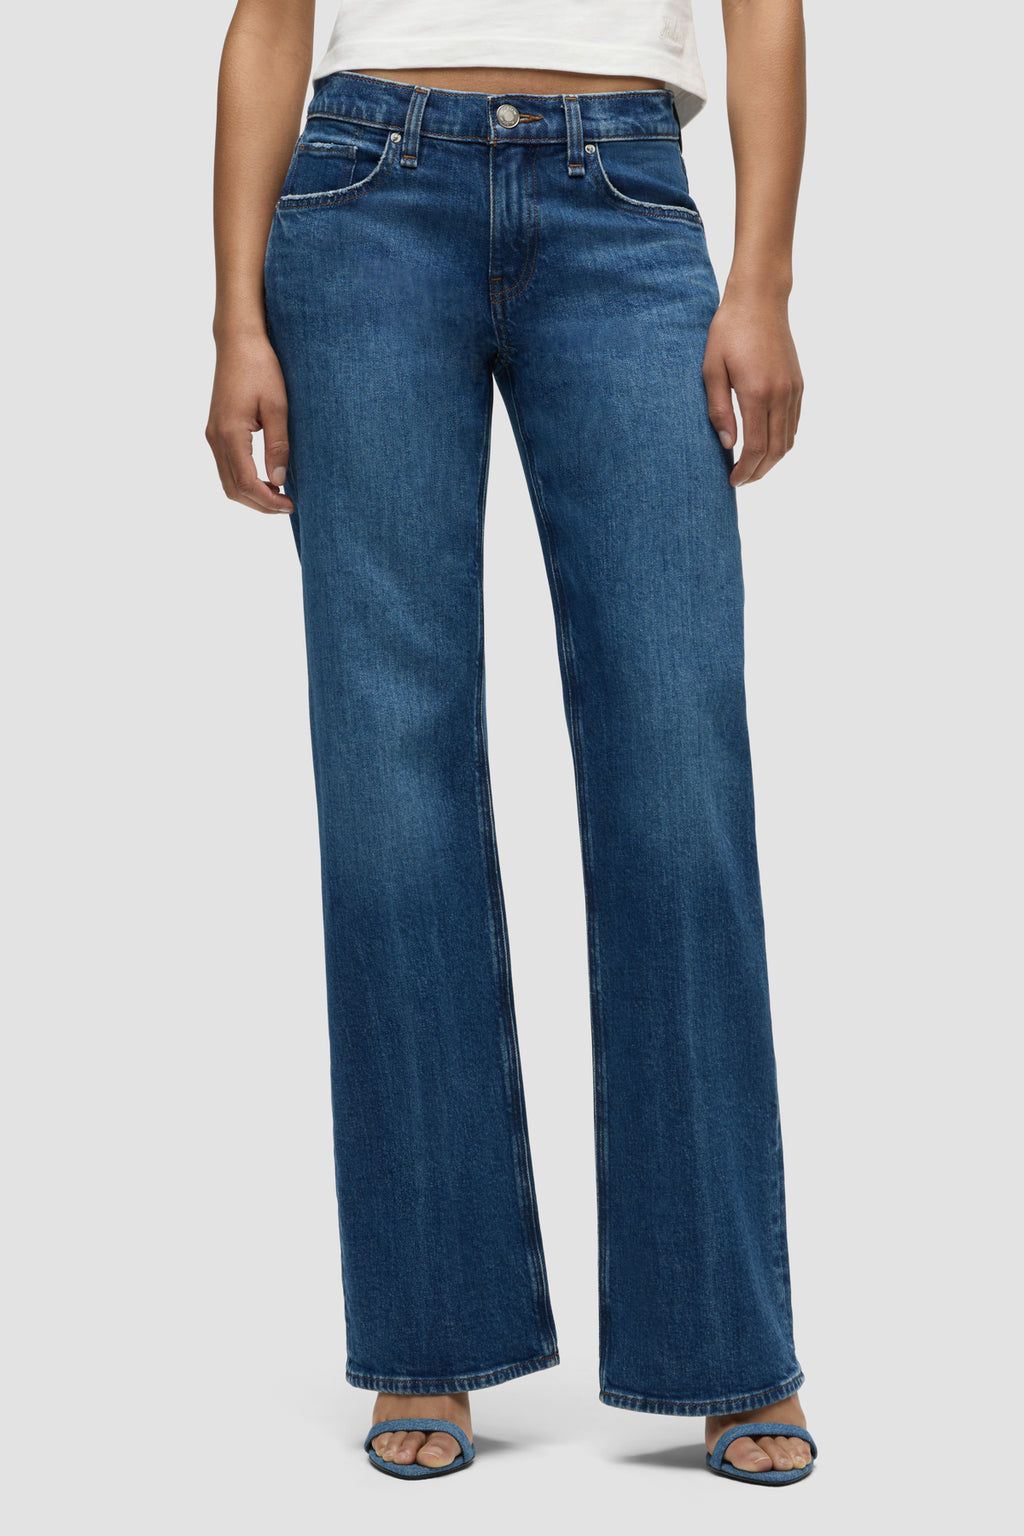 Shop Women's View All at Hudson Jeans | Hudson Jeans